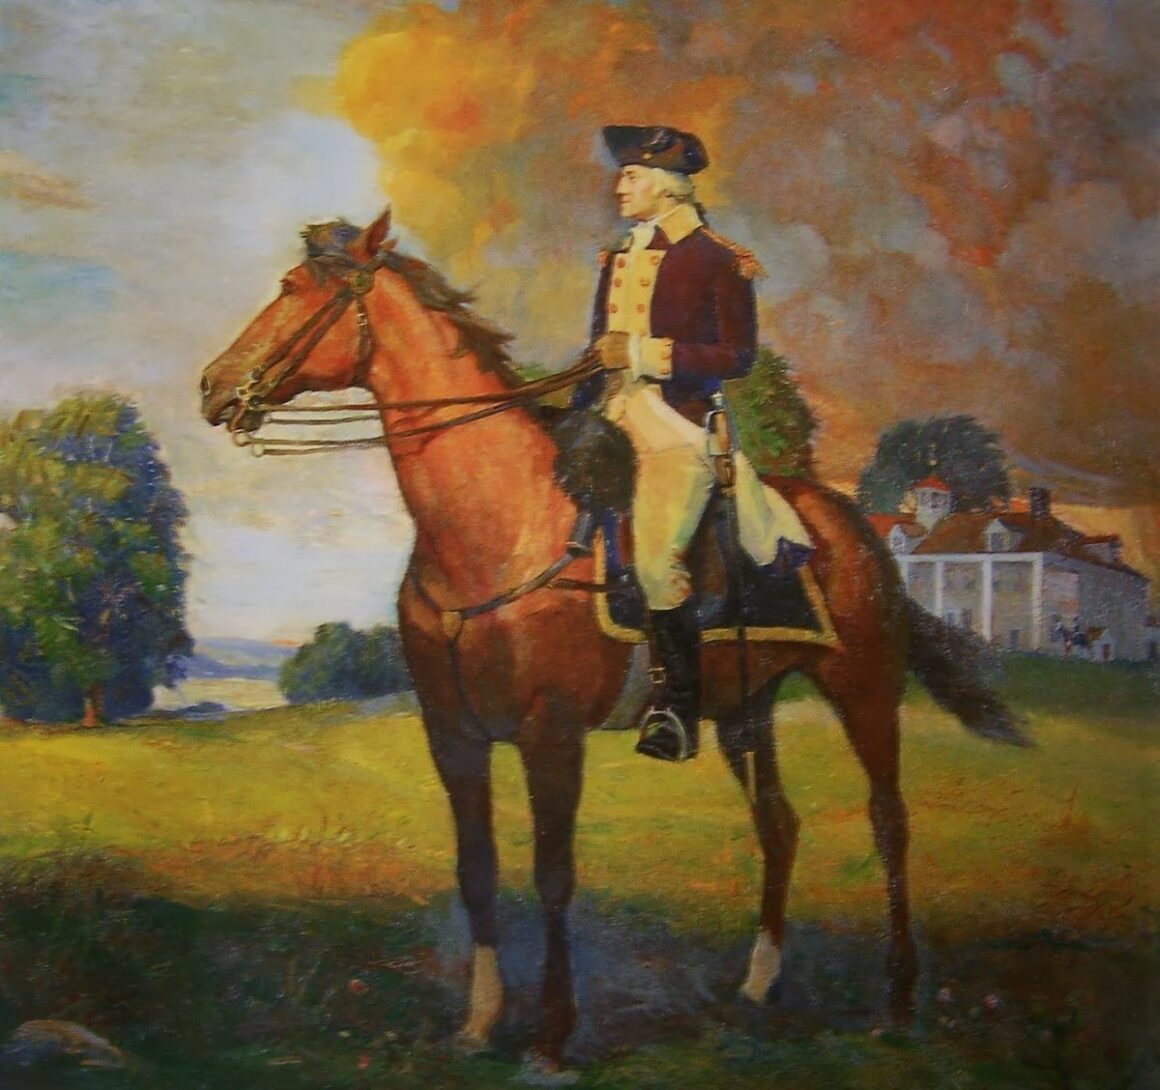 George Washington on a chestnut horse